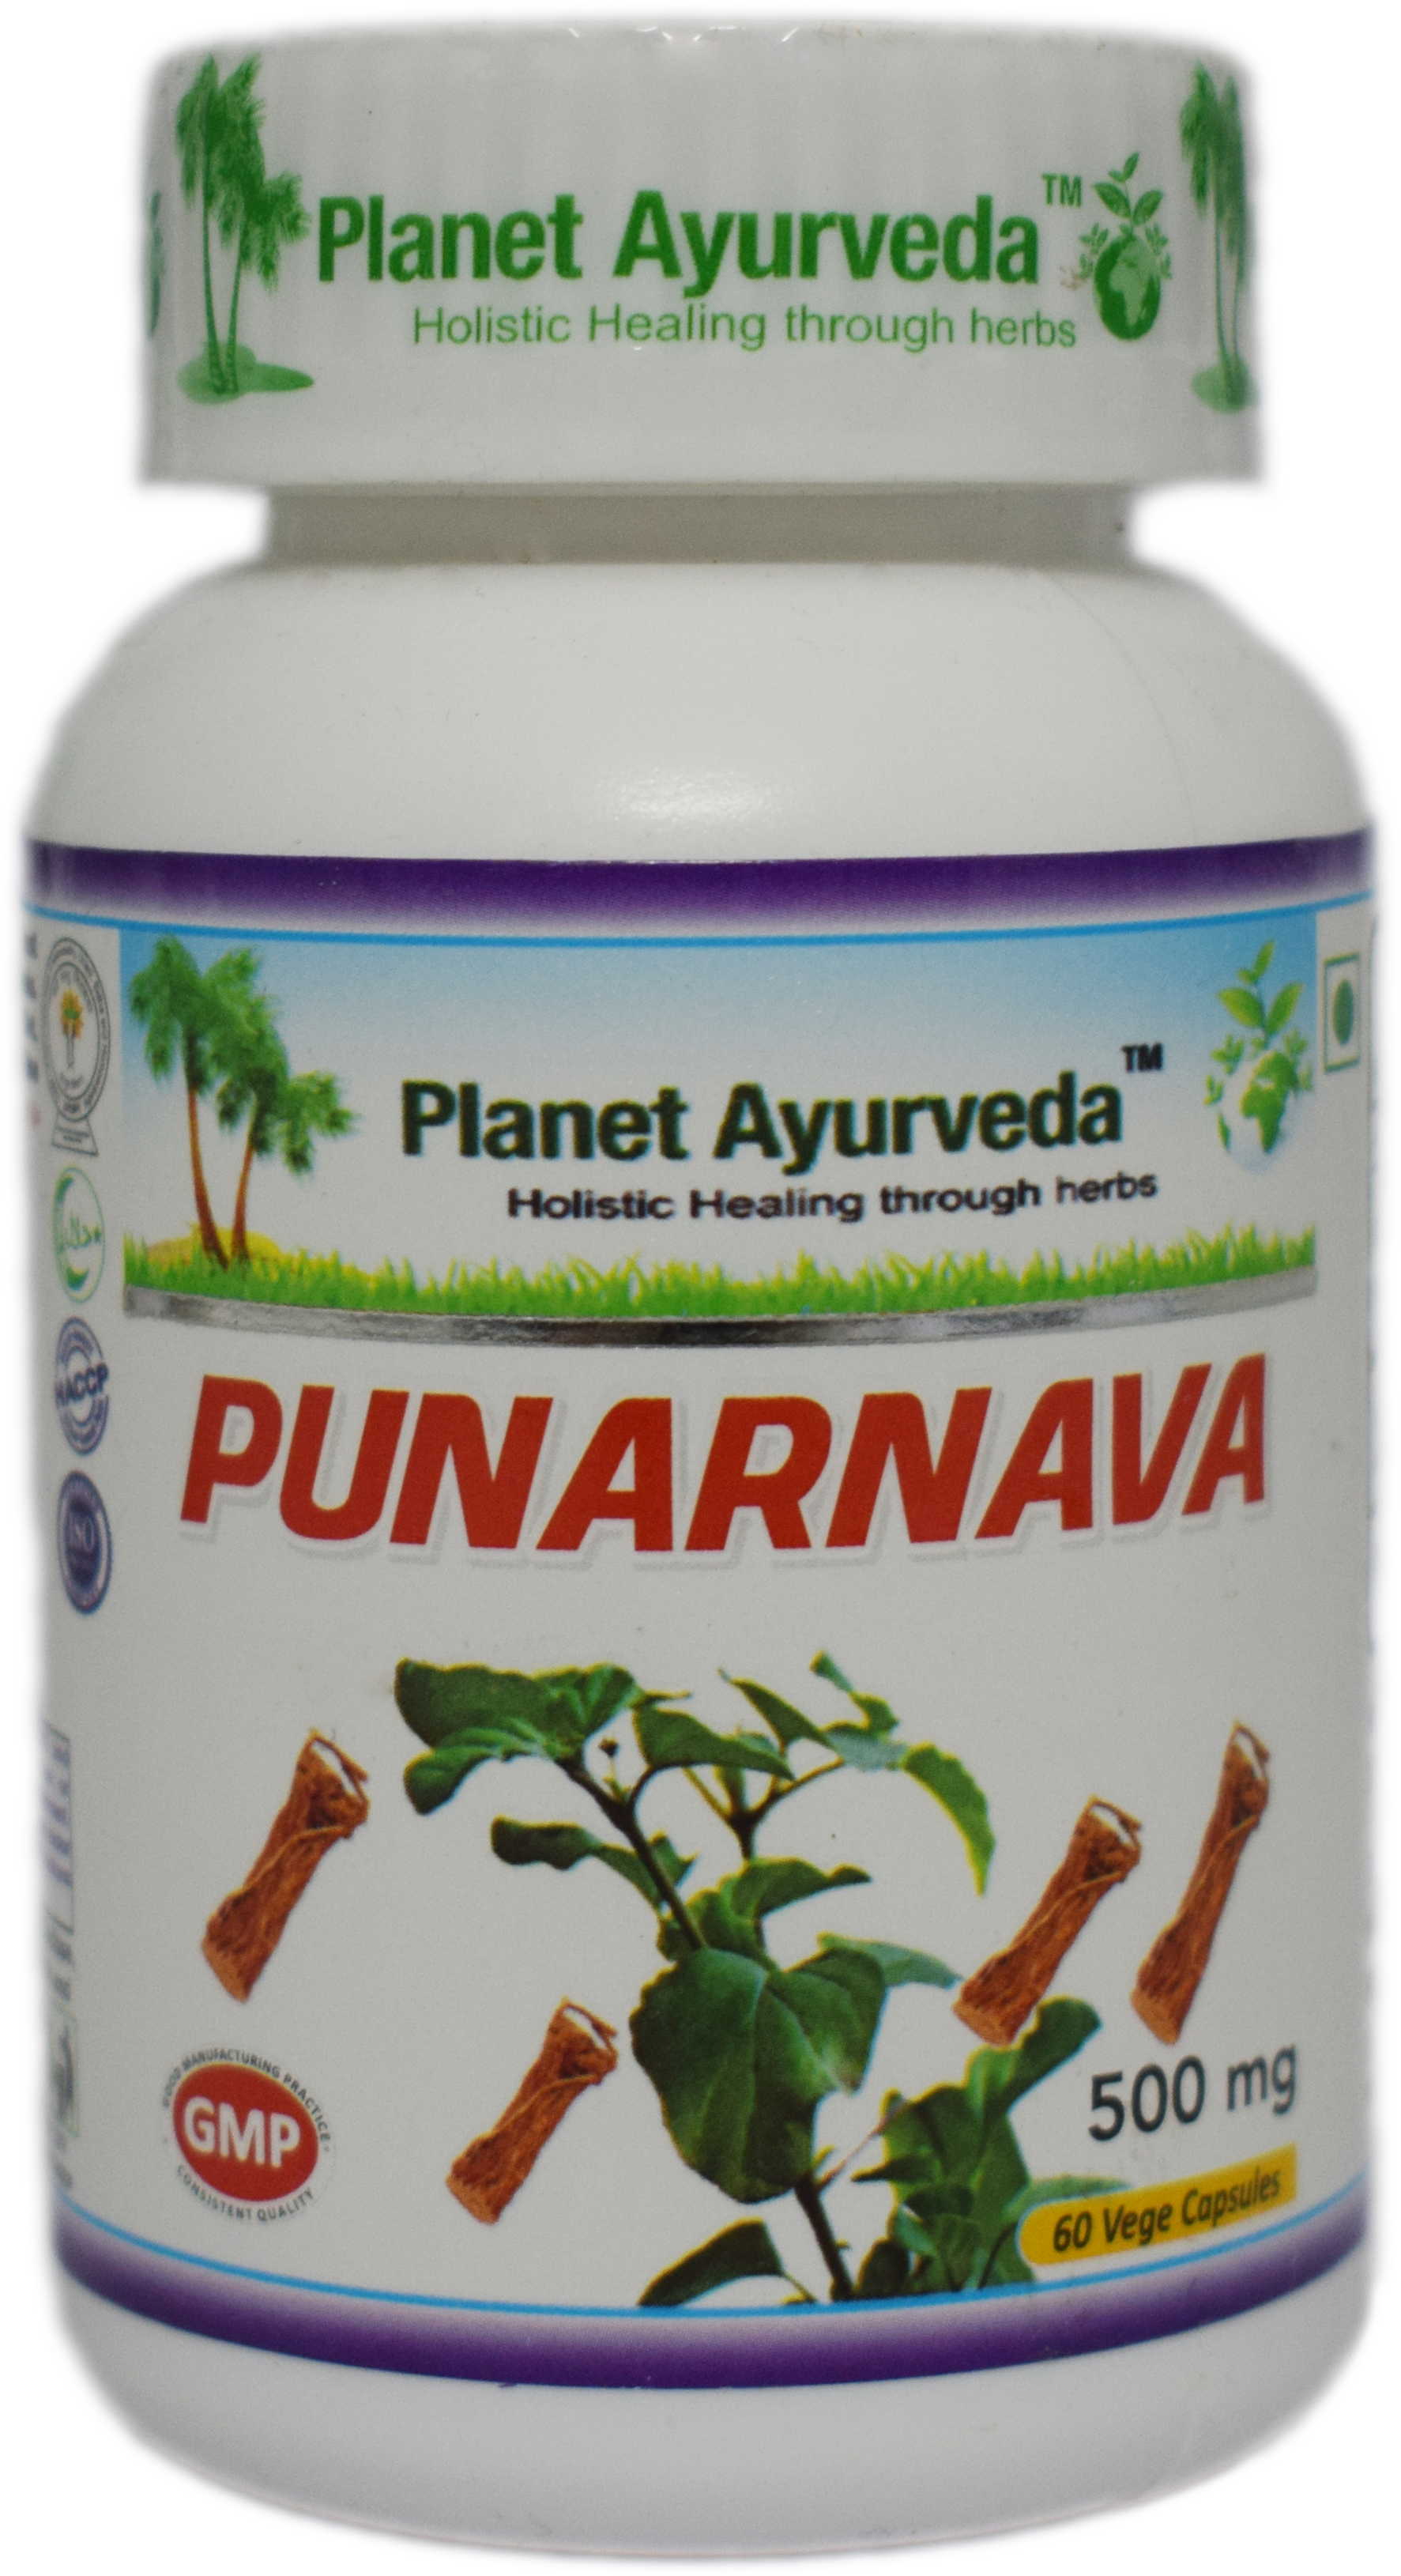 Buy Planet Ayurveda Punarnava Capsules at Best Price Online